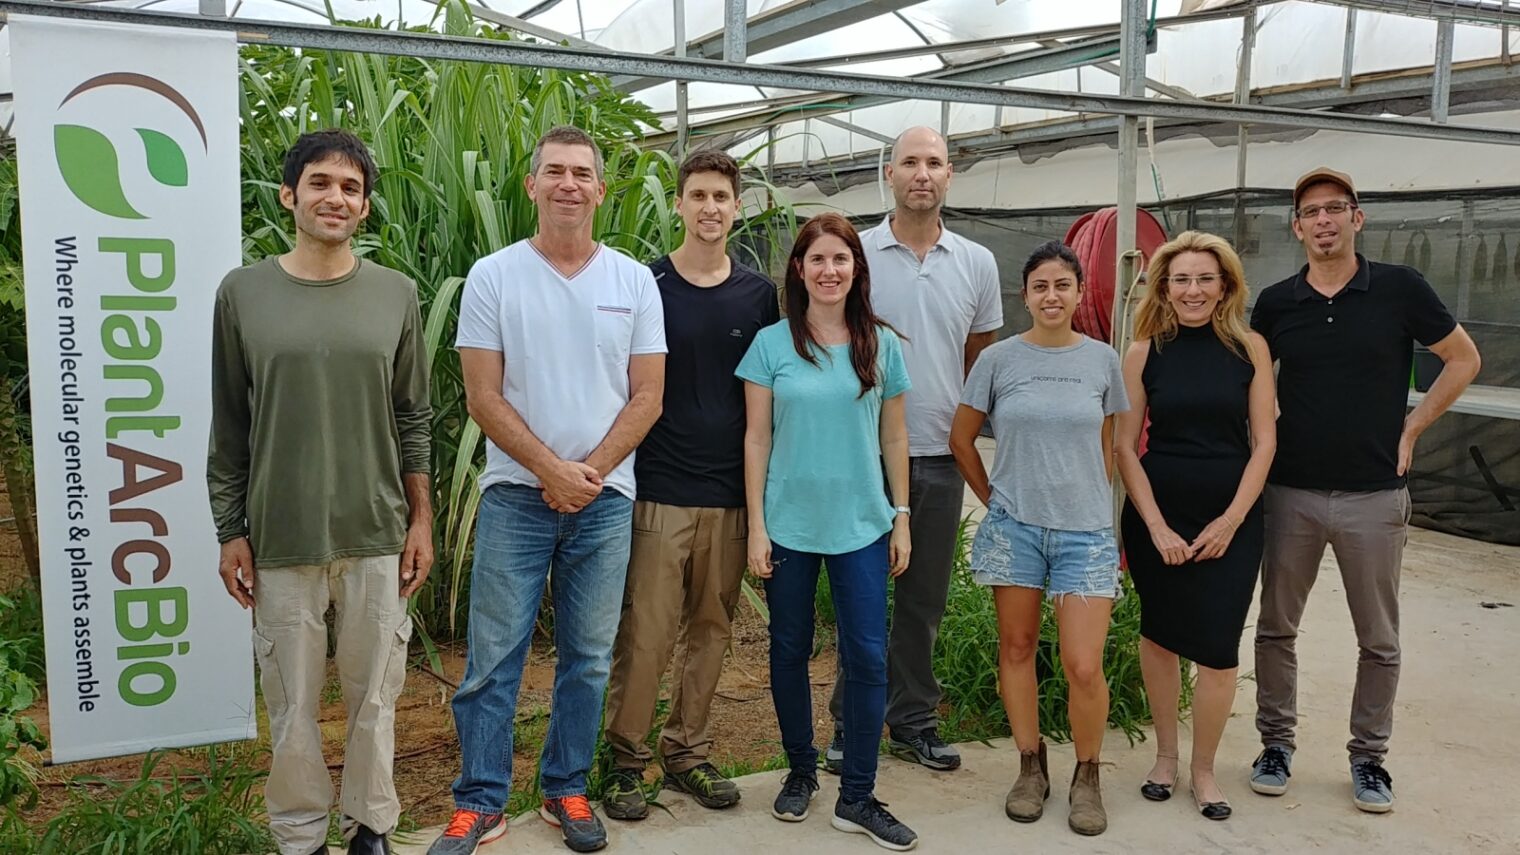 The Plantarcbio team at its experimental greenhouse. Photo: courtesy